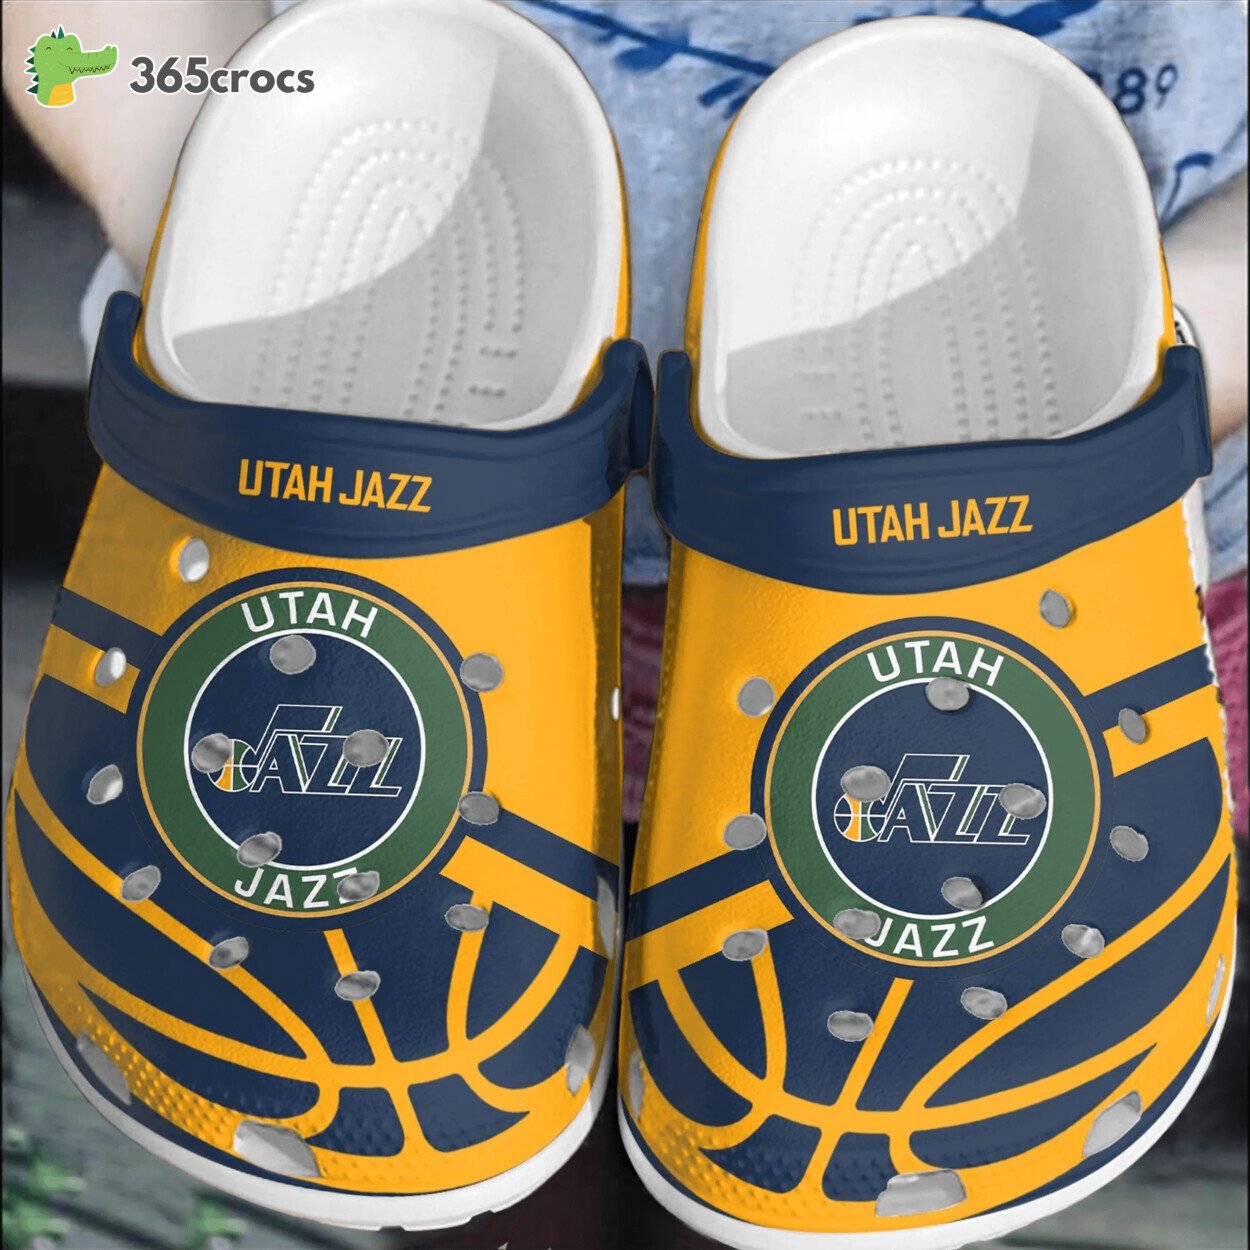 Utah Jazz Basketball Themed Design Comfortable Crocss Clog Footwear